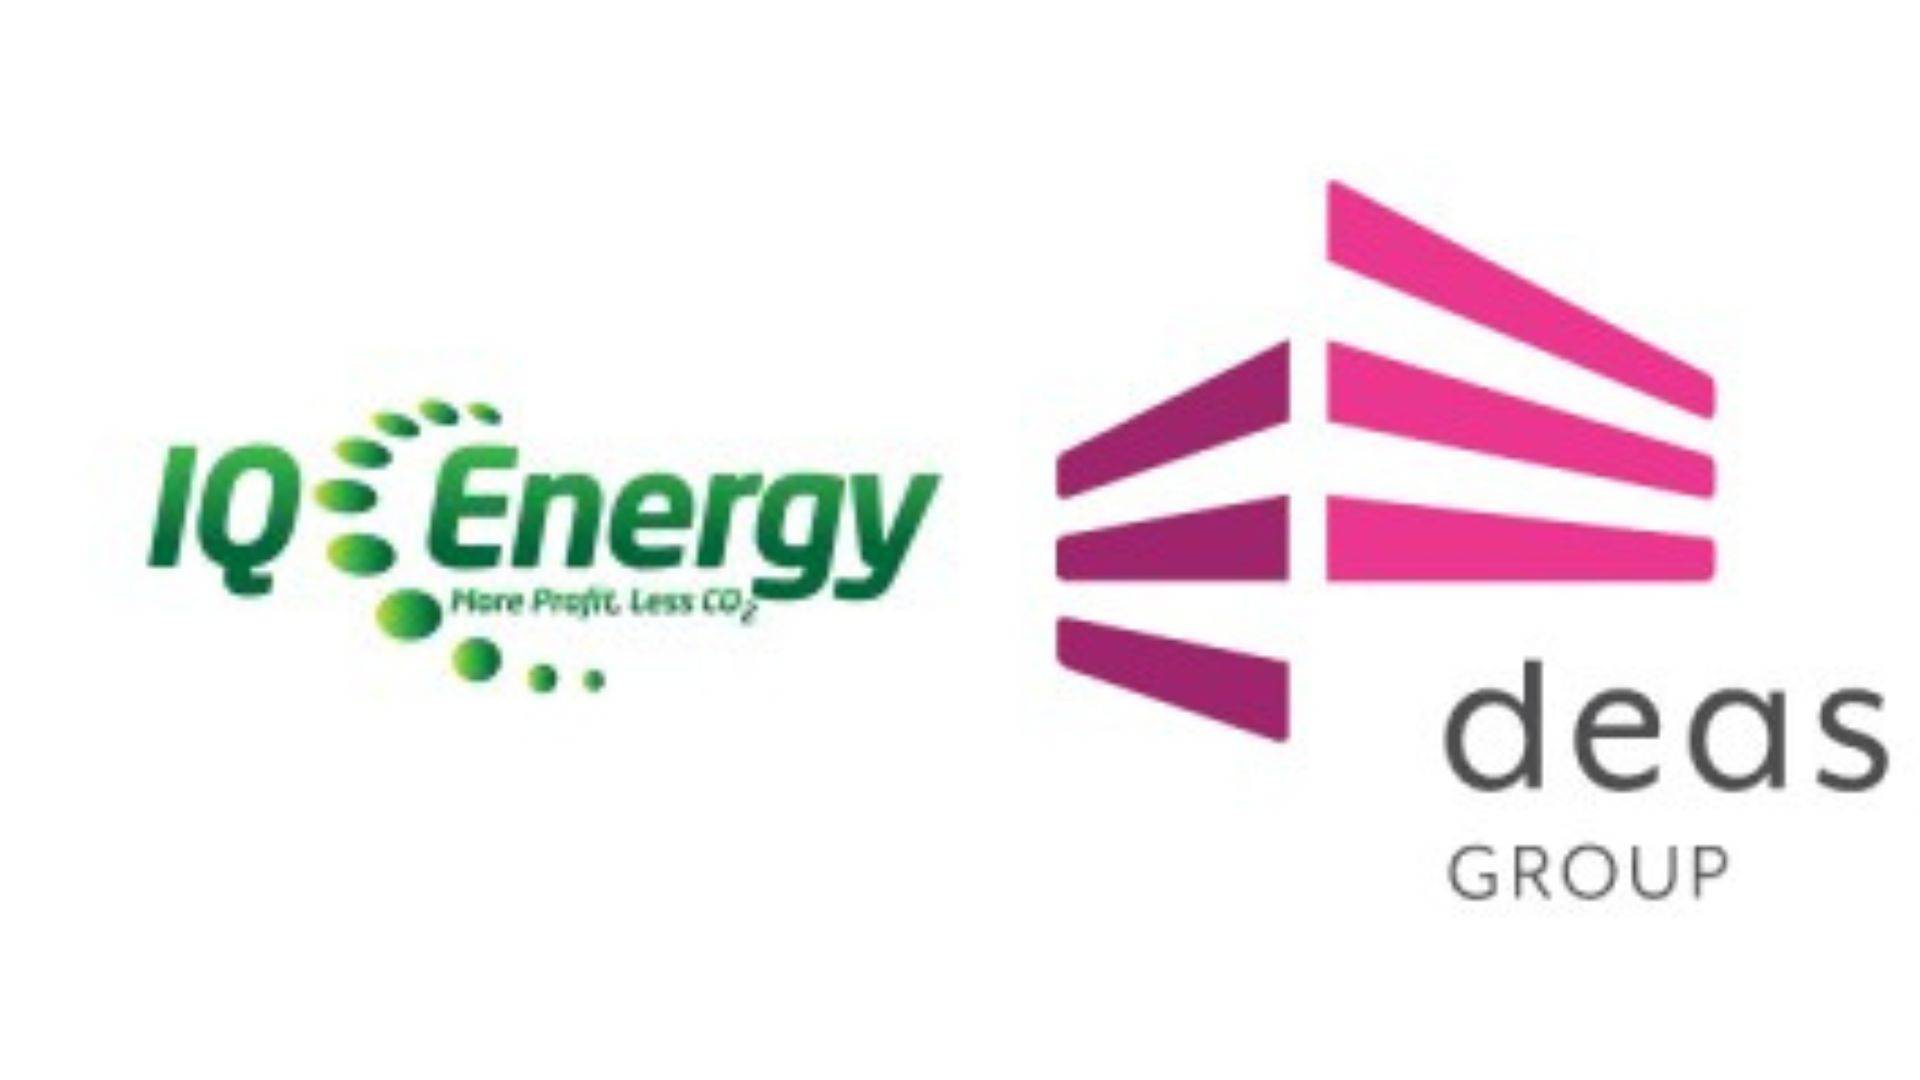 IQ Energy Nordic logo and DEAS Group logo